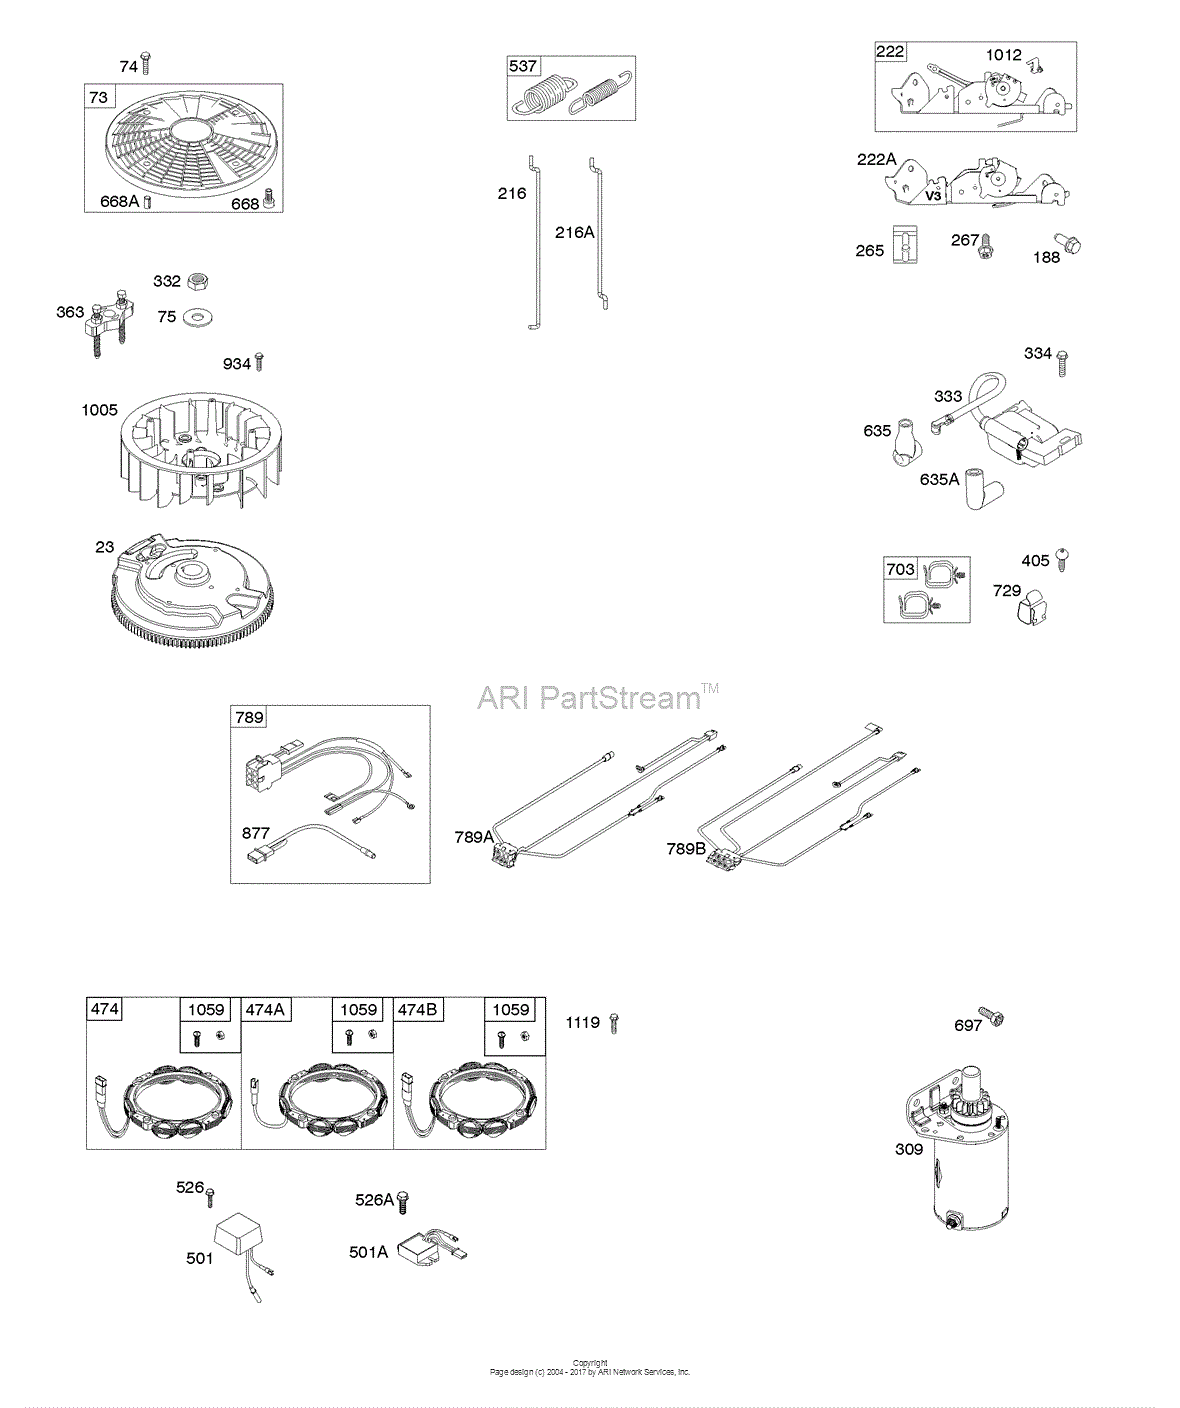 wiring diagram for a 445577-0755-b1 - briggs & stratton vertical engine